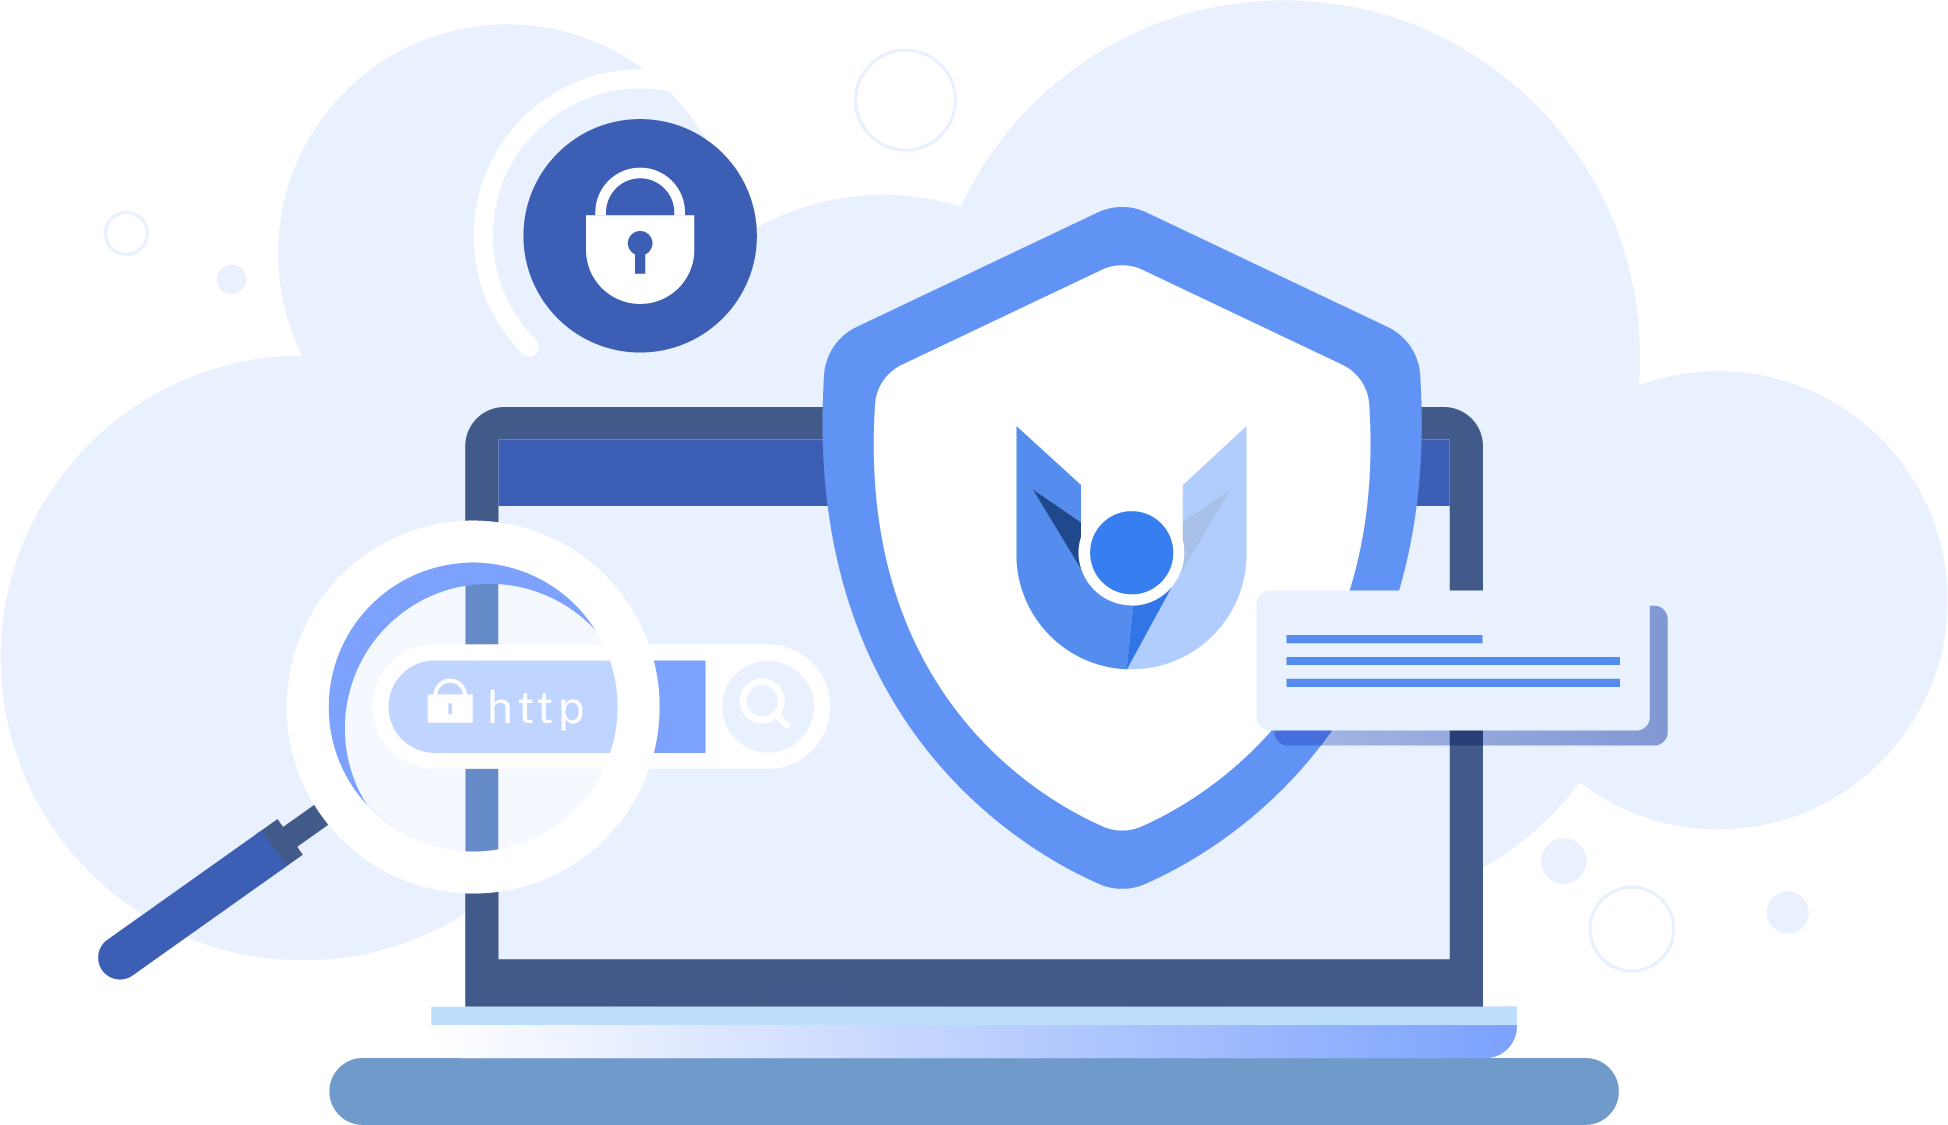 Enterprise-grade secure web browsing